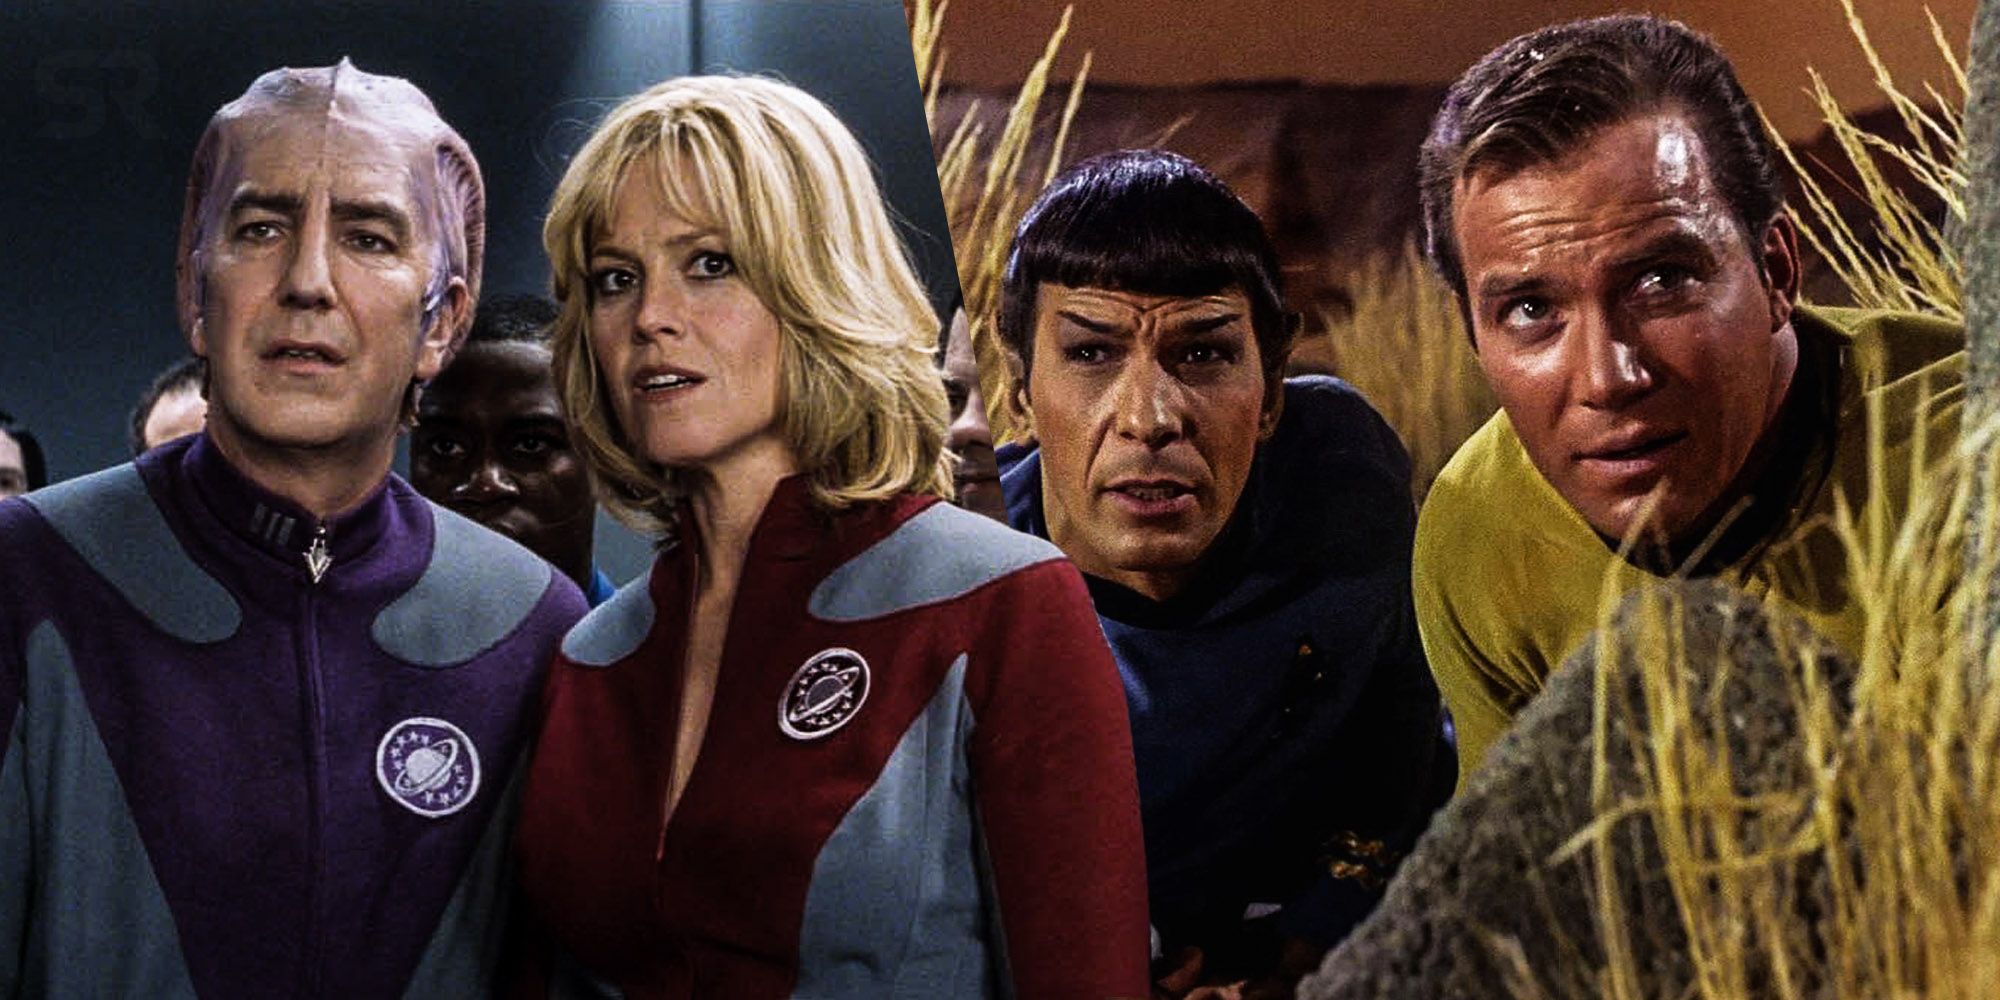 Galaxy Quest Star Trek parody Captain kirk spock